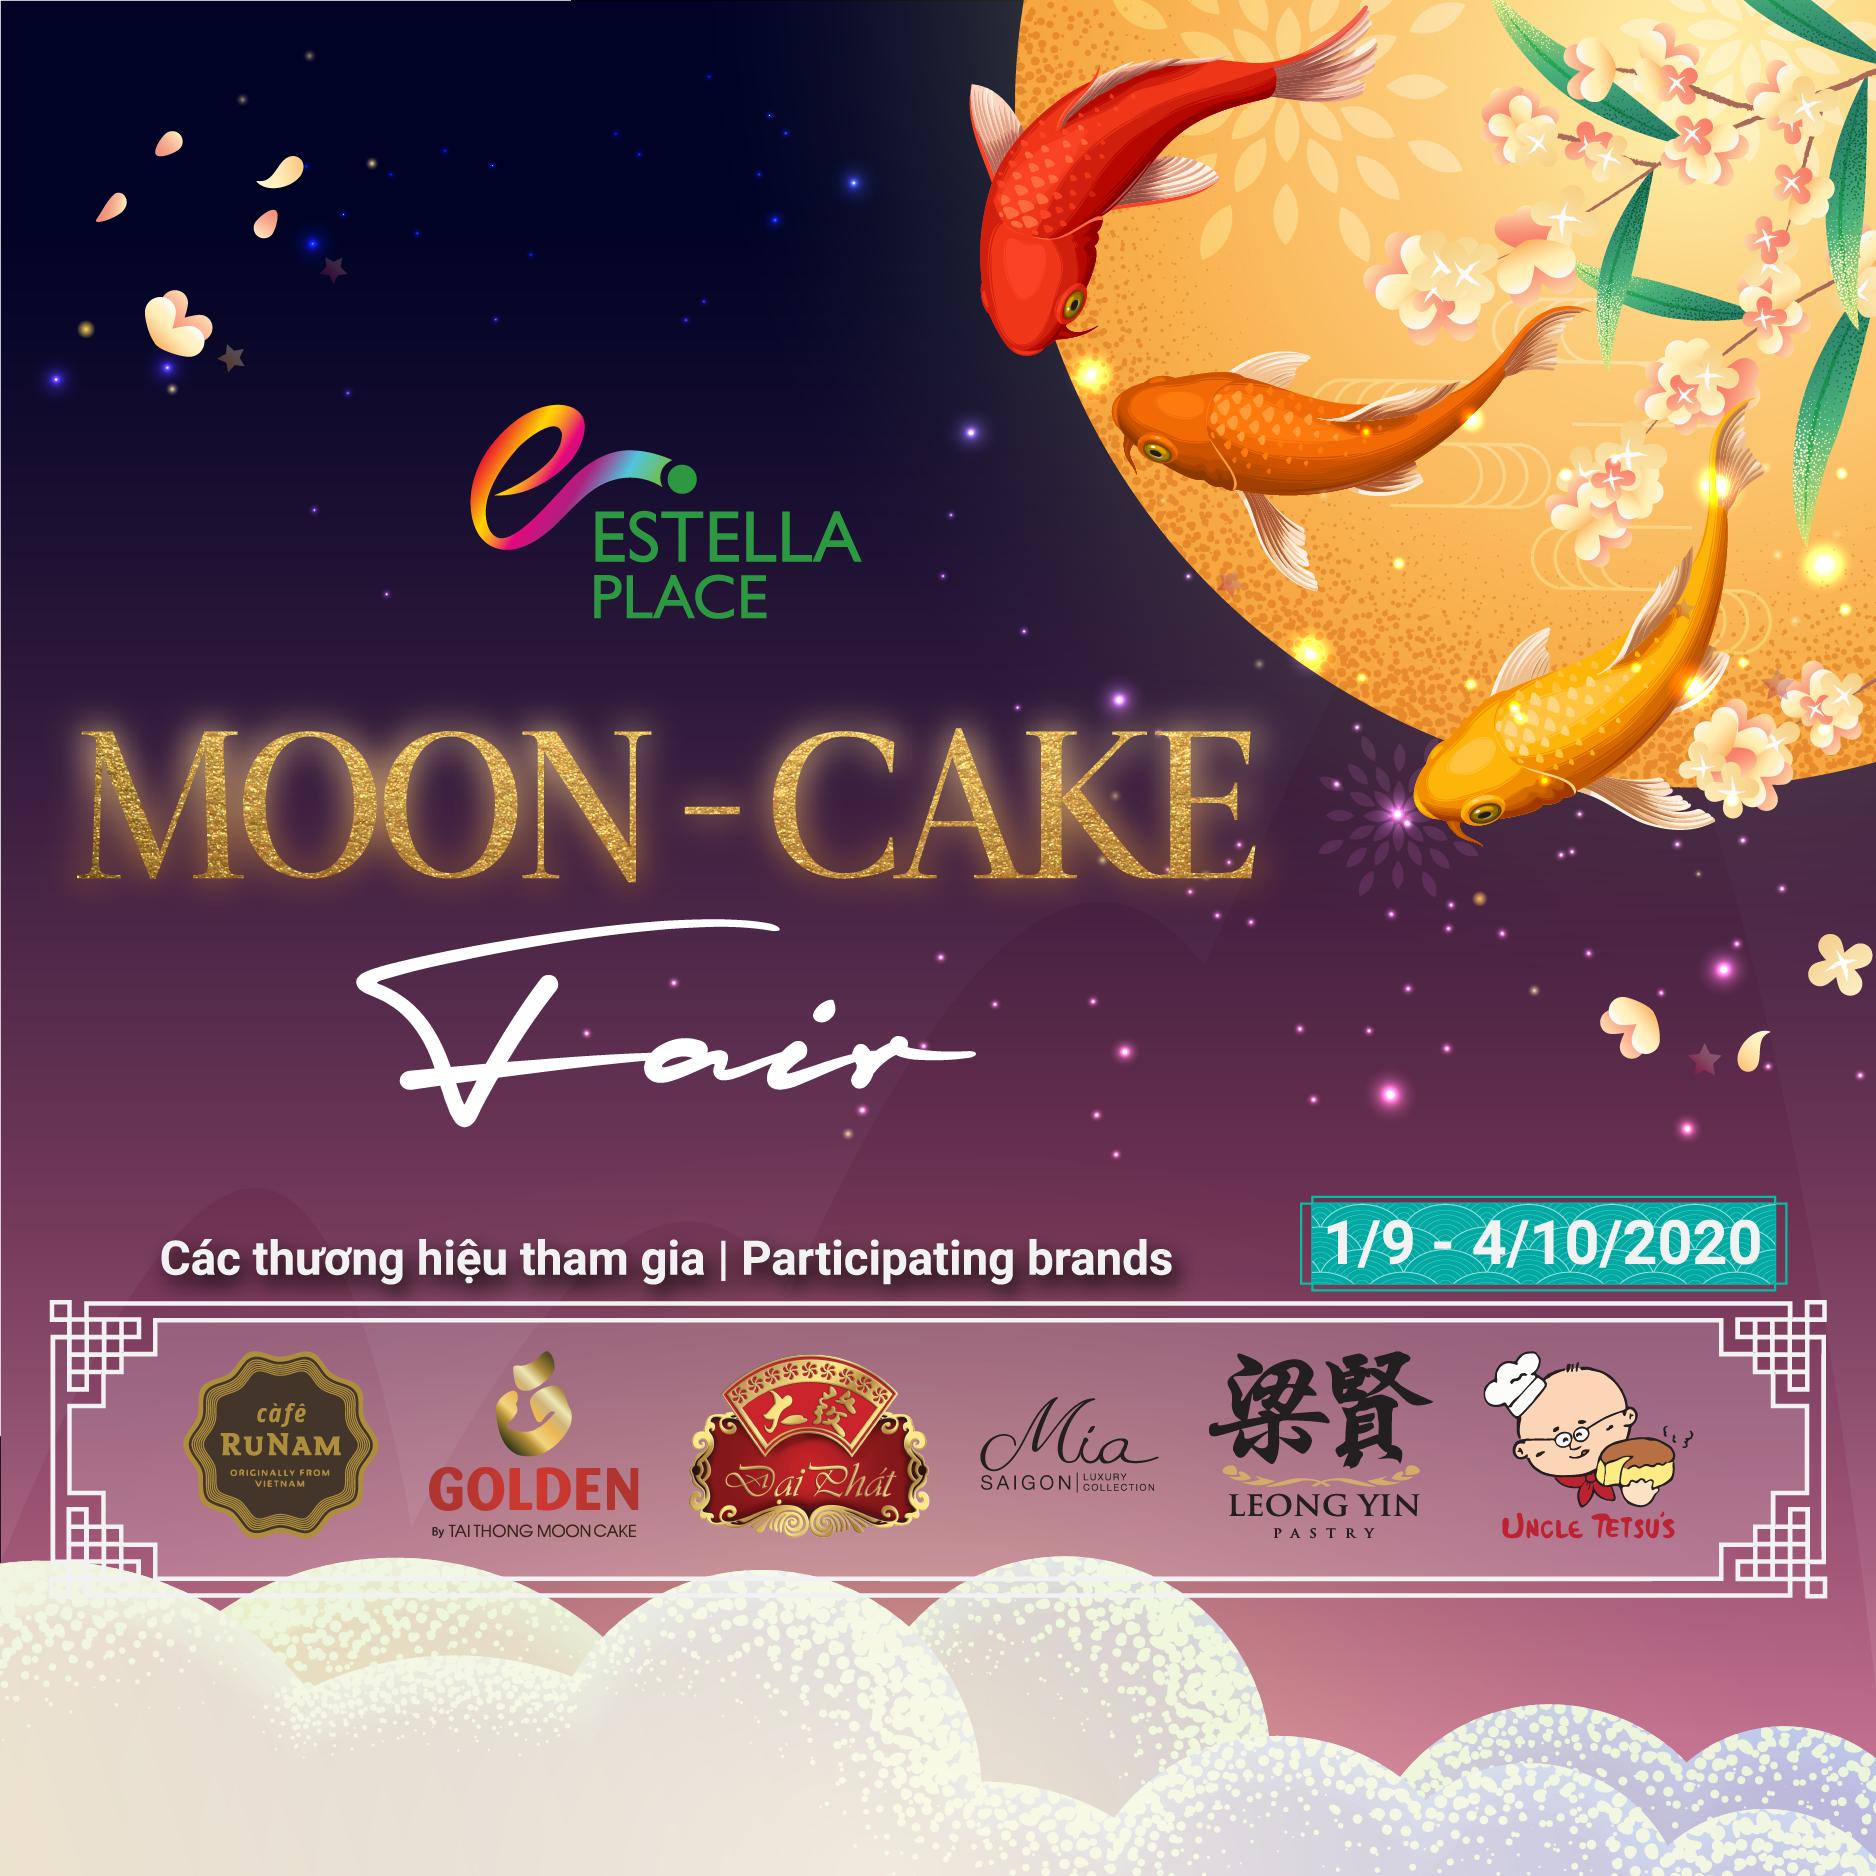 Estella Place Moon Cake Fair 2020